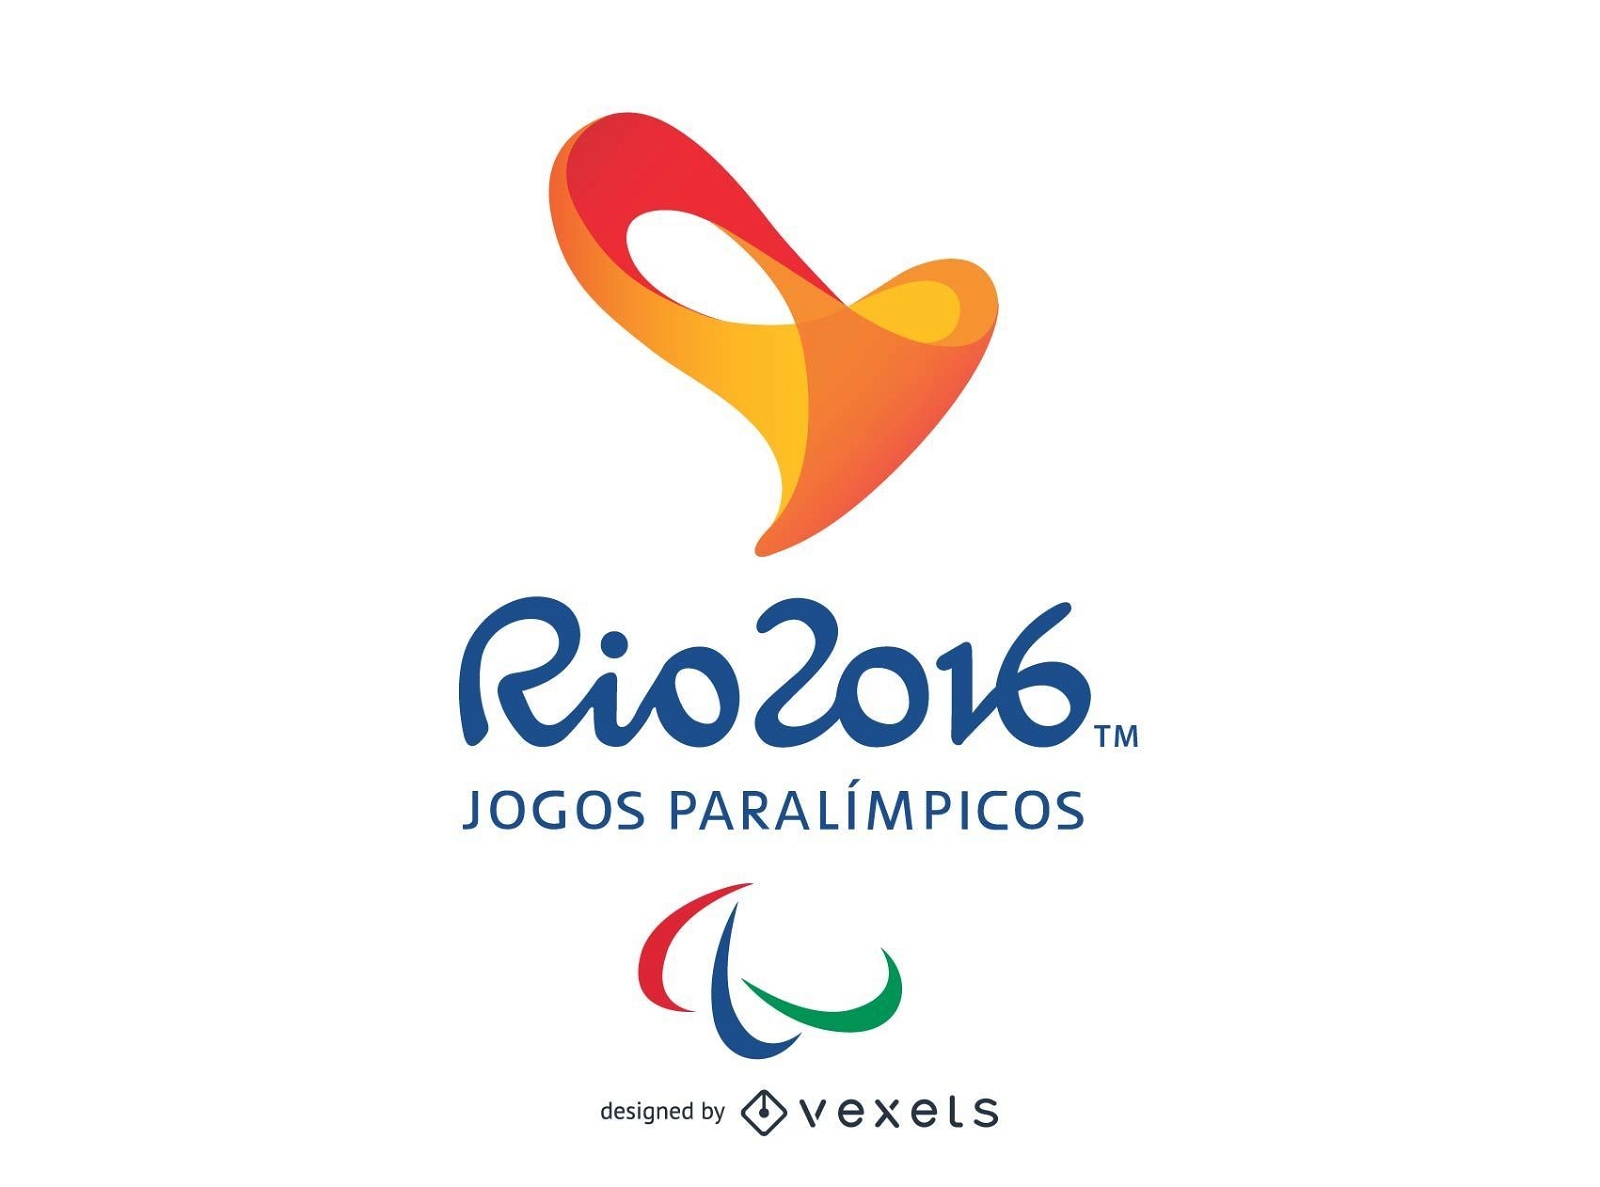 jogos-paralimpicos-2016-modalidades-imprimir.JPG (464×678)